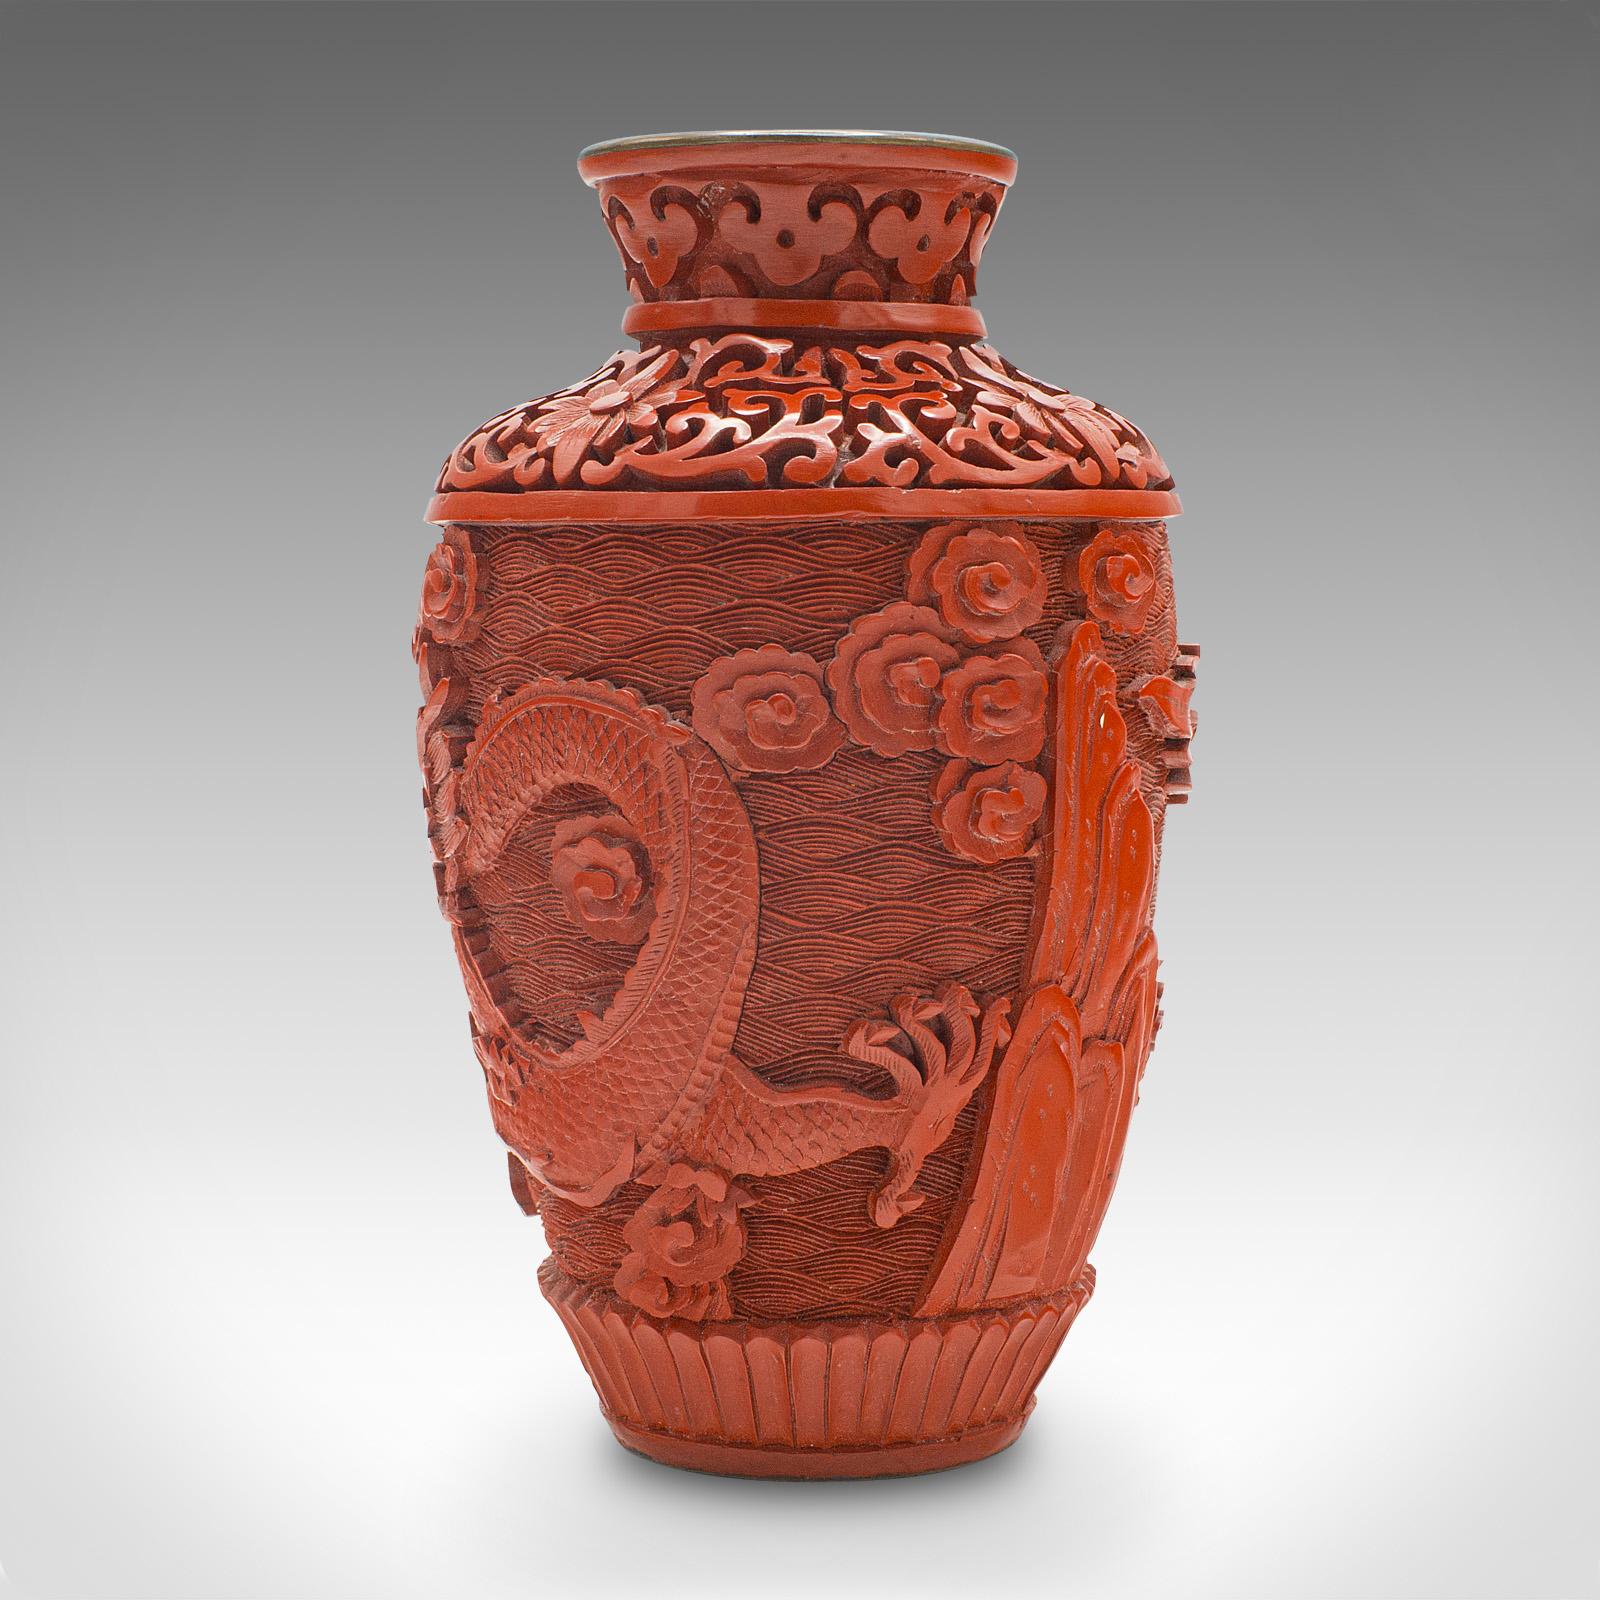 Composition Small Vintage Cinnabar Posy Vase, Chinese Decorative Urn, Cloisonne, Mid-Century